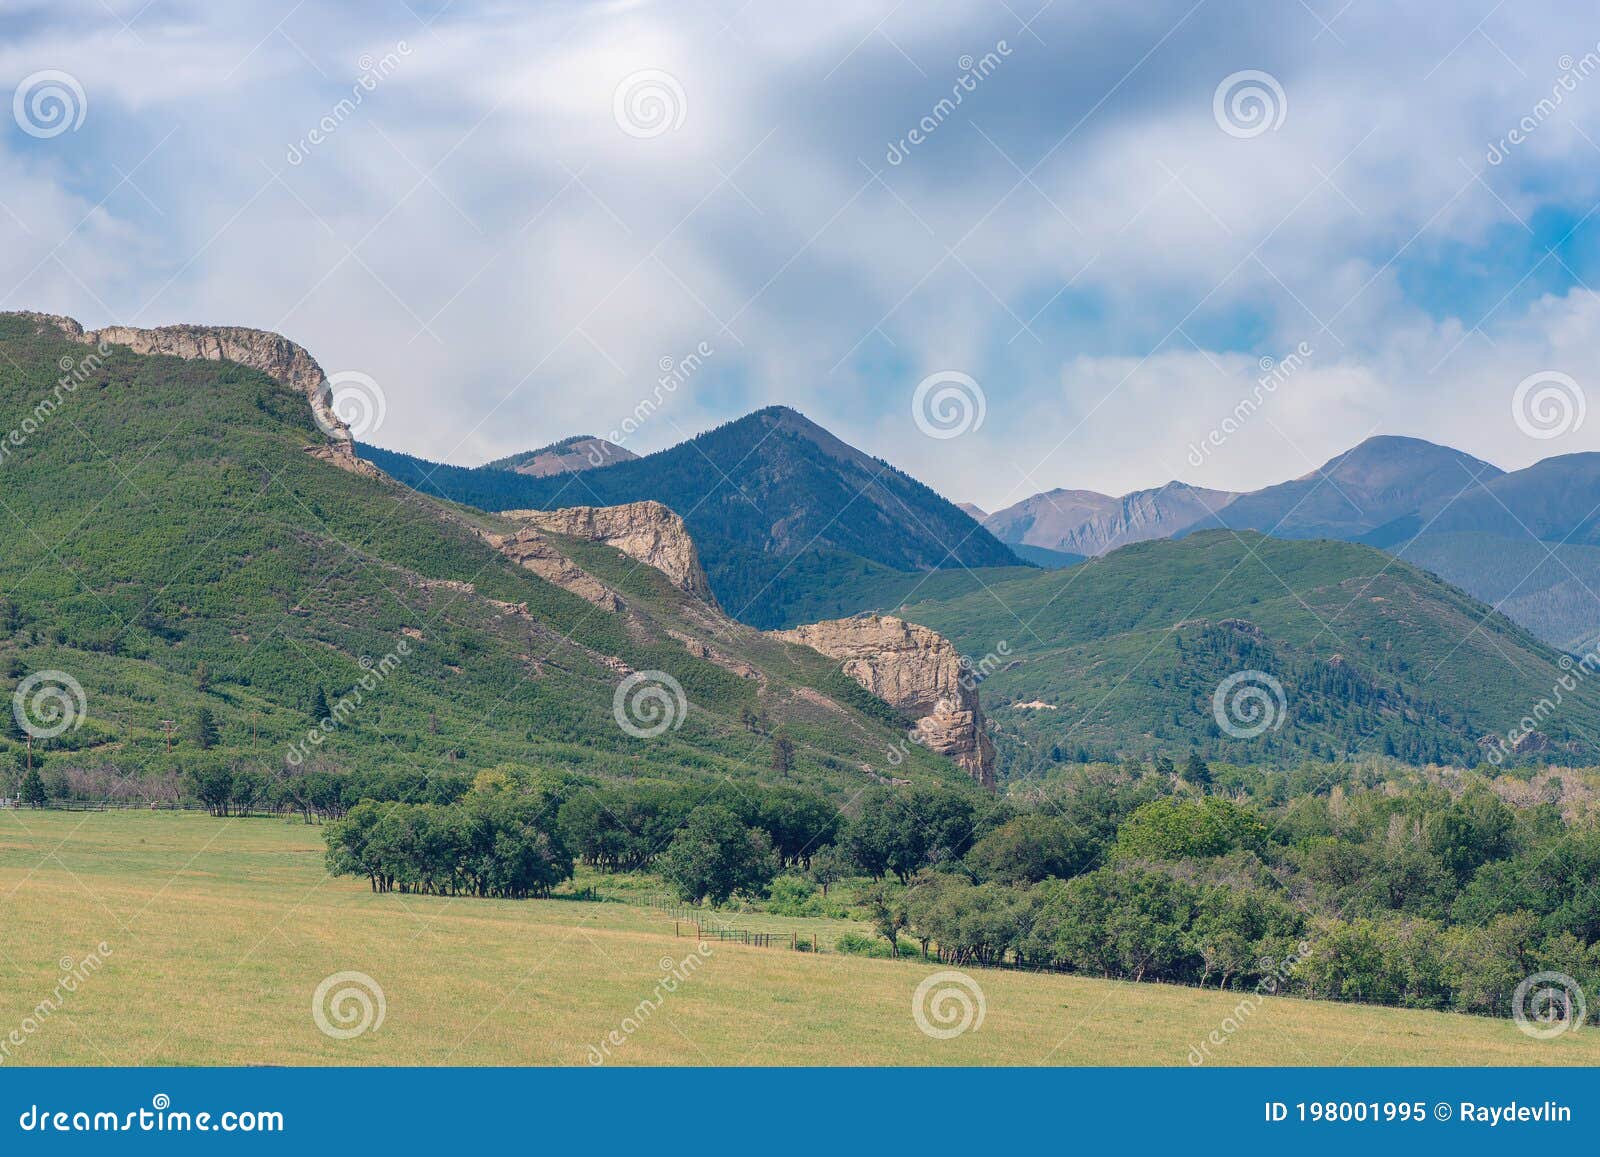 cuchara mountain landscape